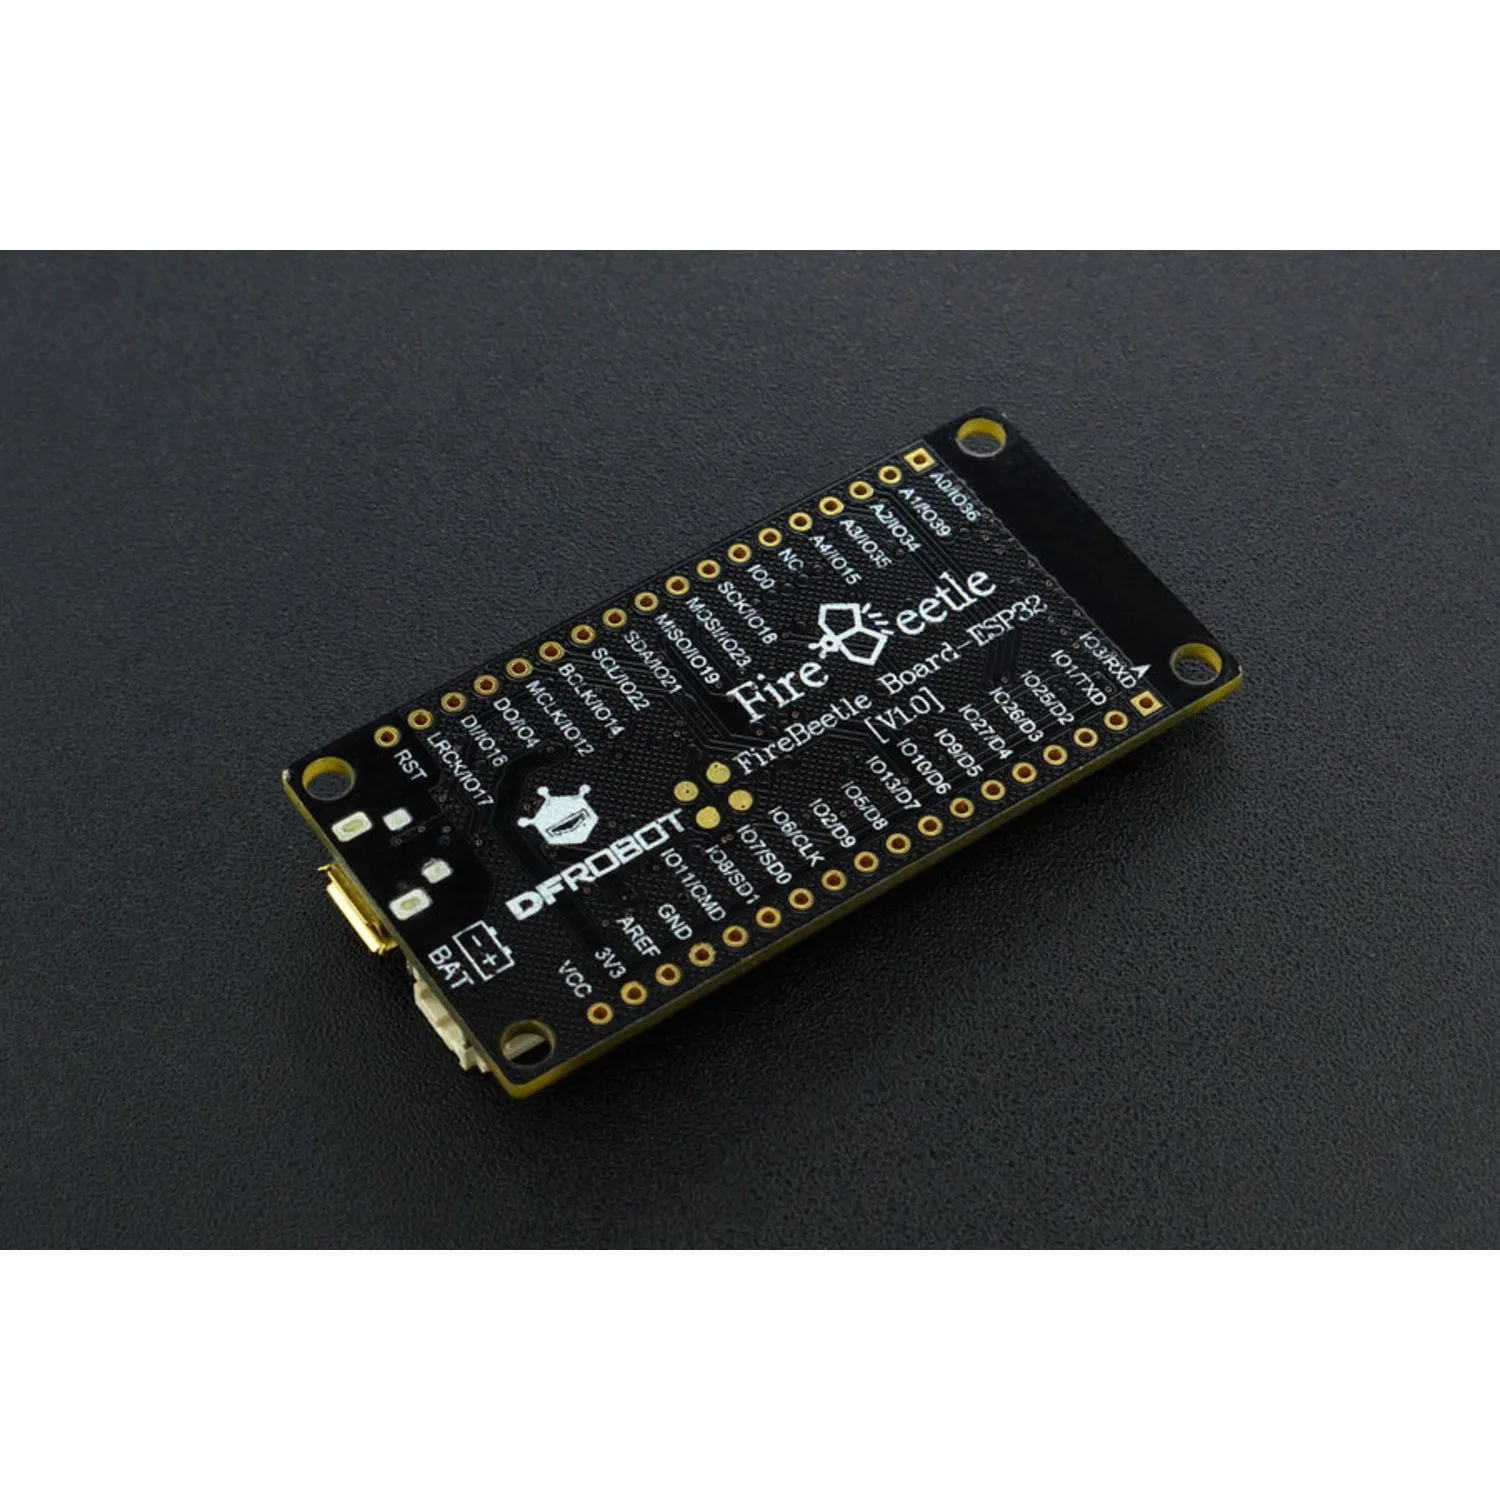 Photo of FireBeetle ESP32 IOT Microcontroller (Supports Wi-Fi  Bluetooth